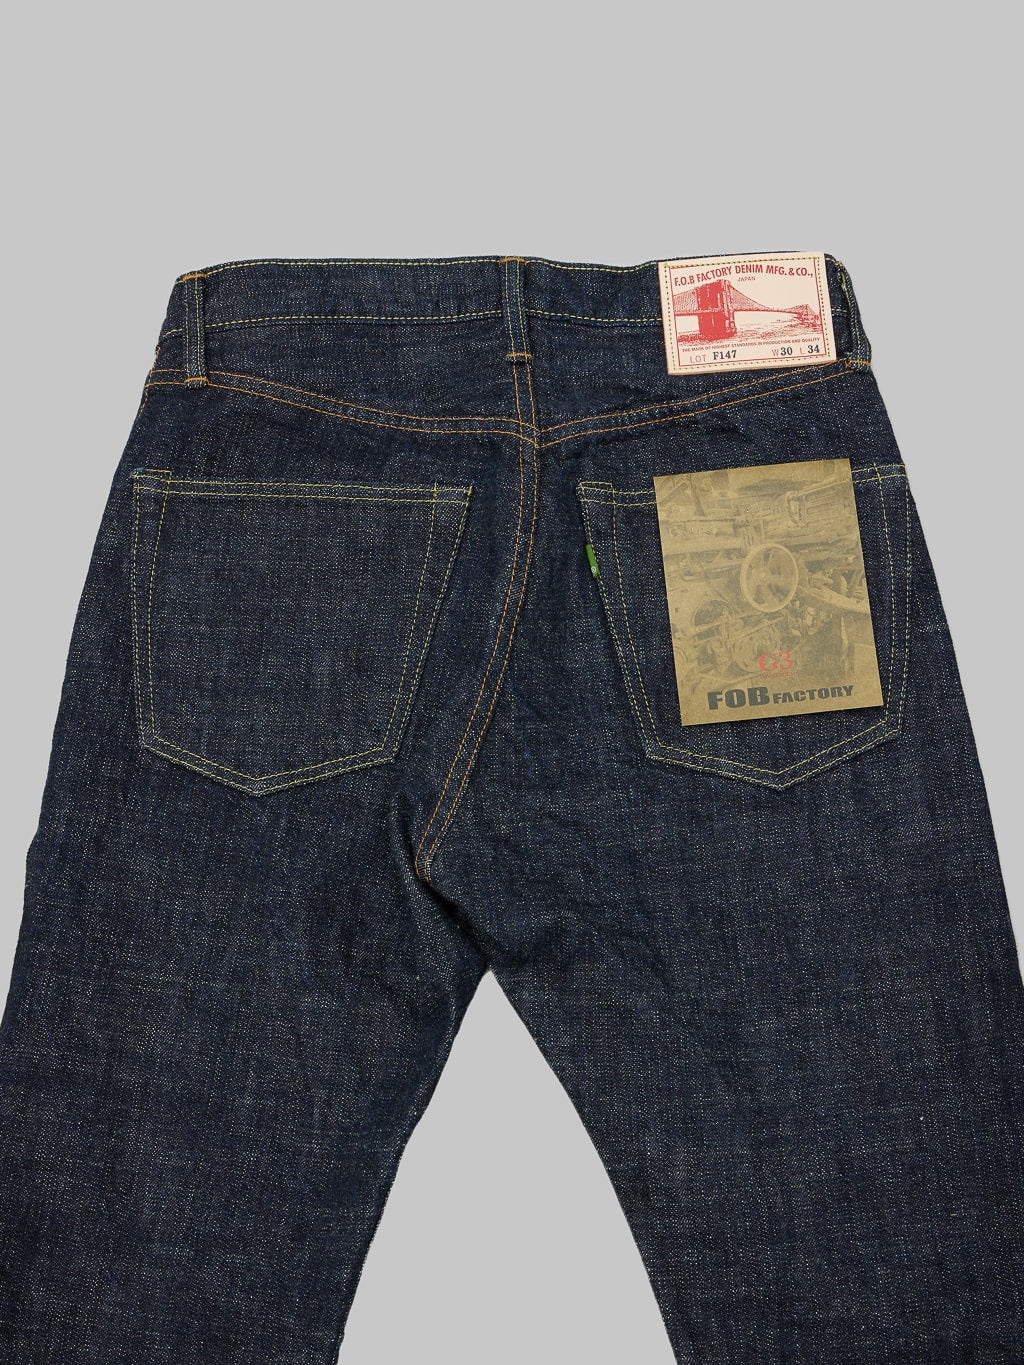 Fob factory slim straight jean back pockets green tab